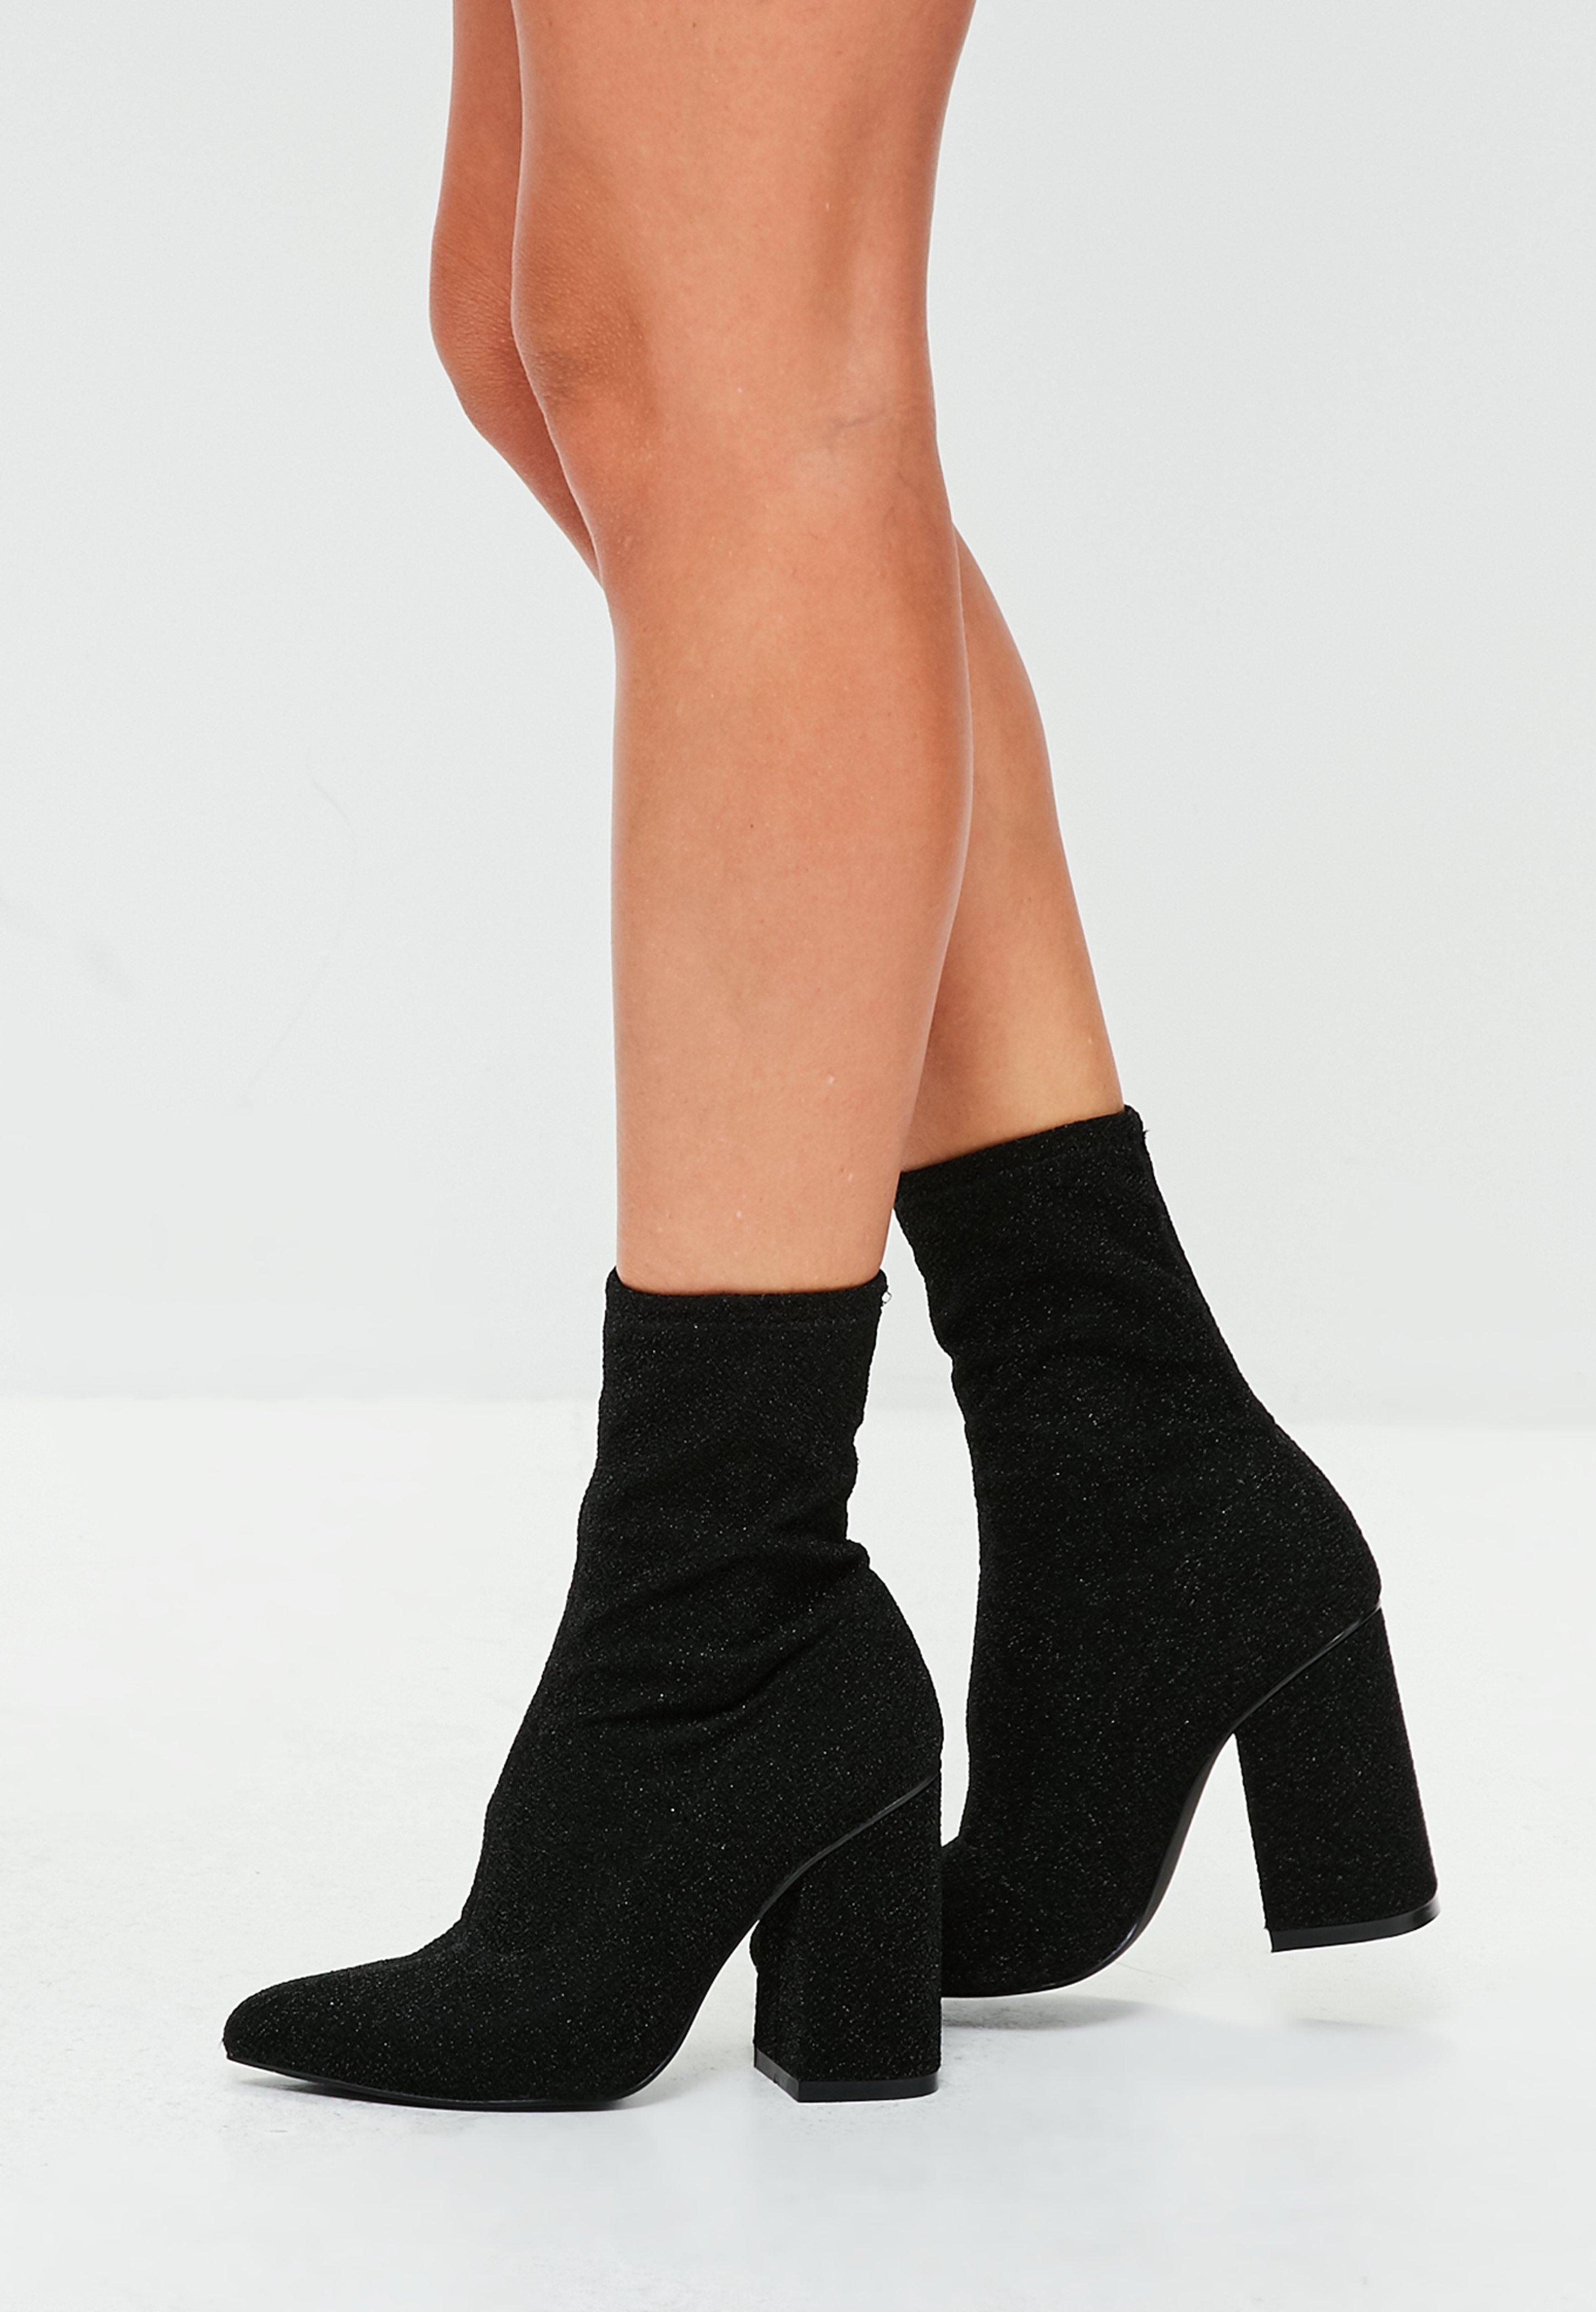 Lyst - Missguided Black Pointed Glitter Block Heels in Black